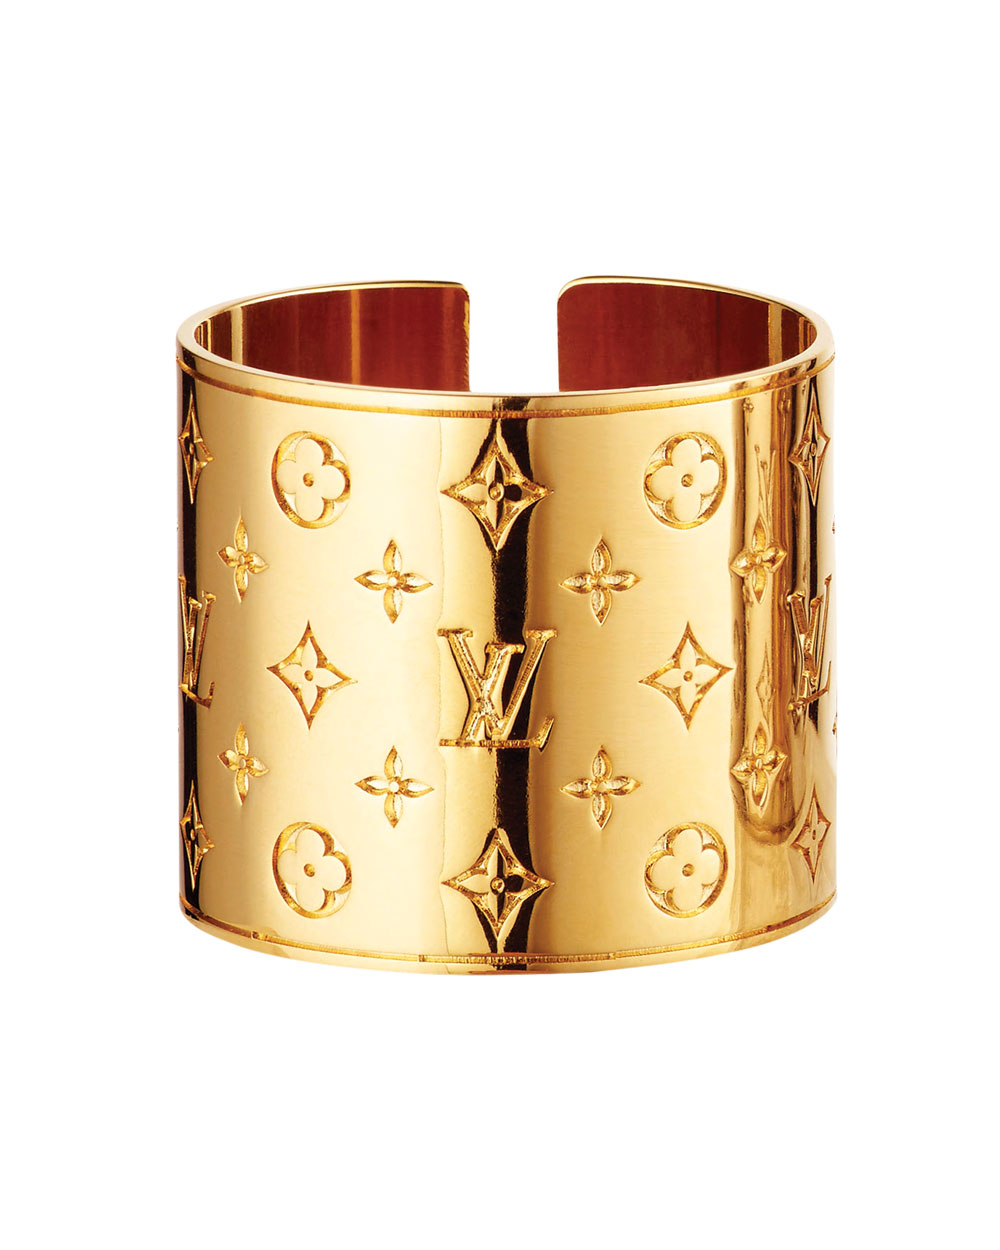 Louis Vuitton cuff, $1190.